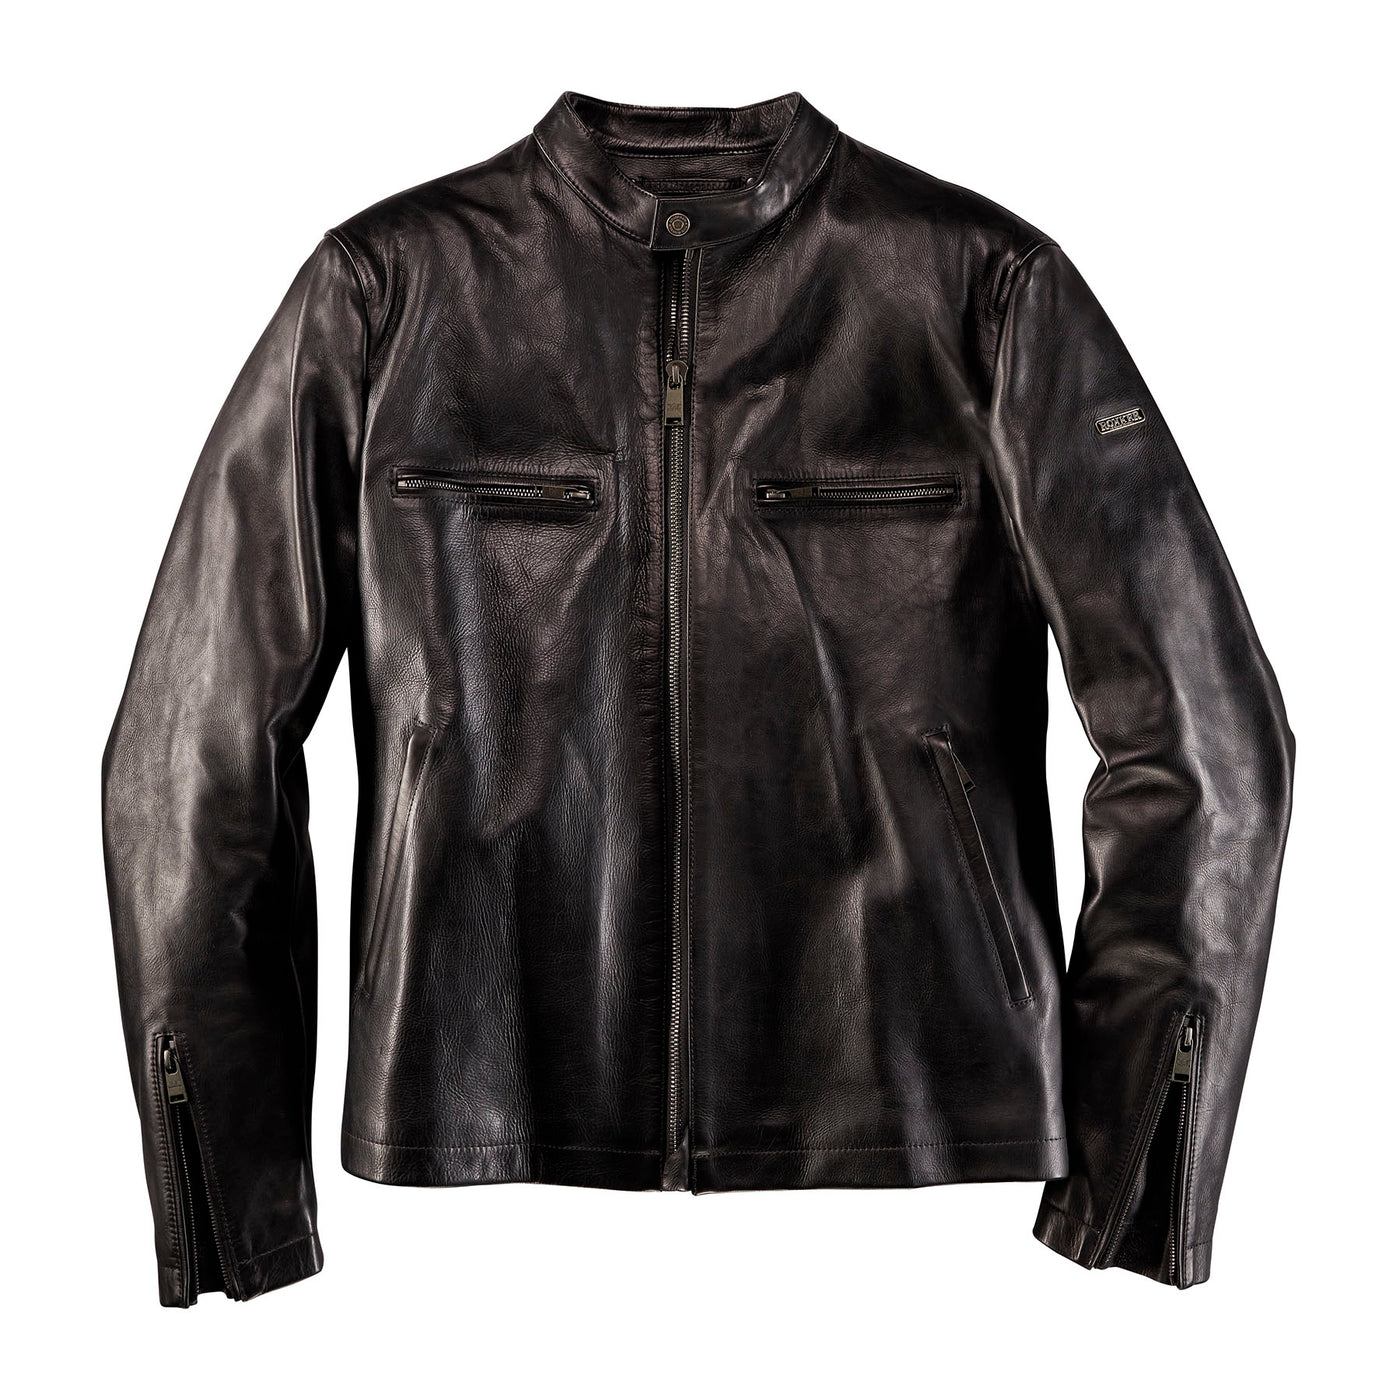 Rokker leather jacket MC